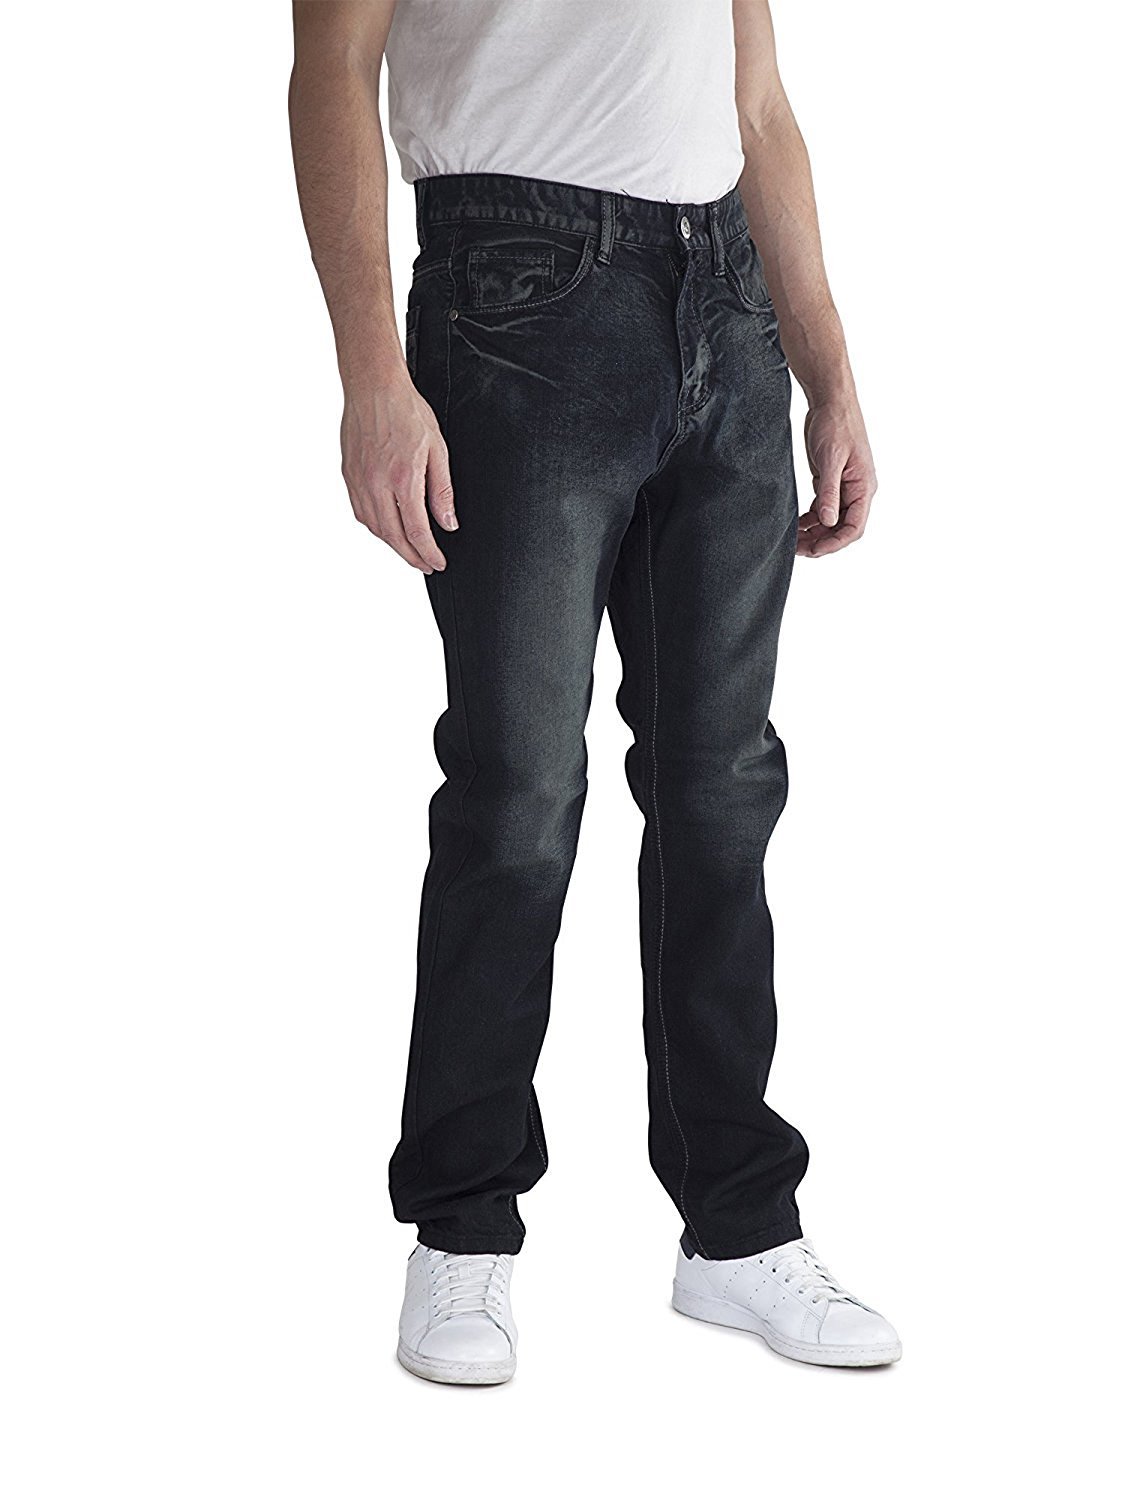 400 UOMO Men's Slim-Straight Fit Denim Jeans